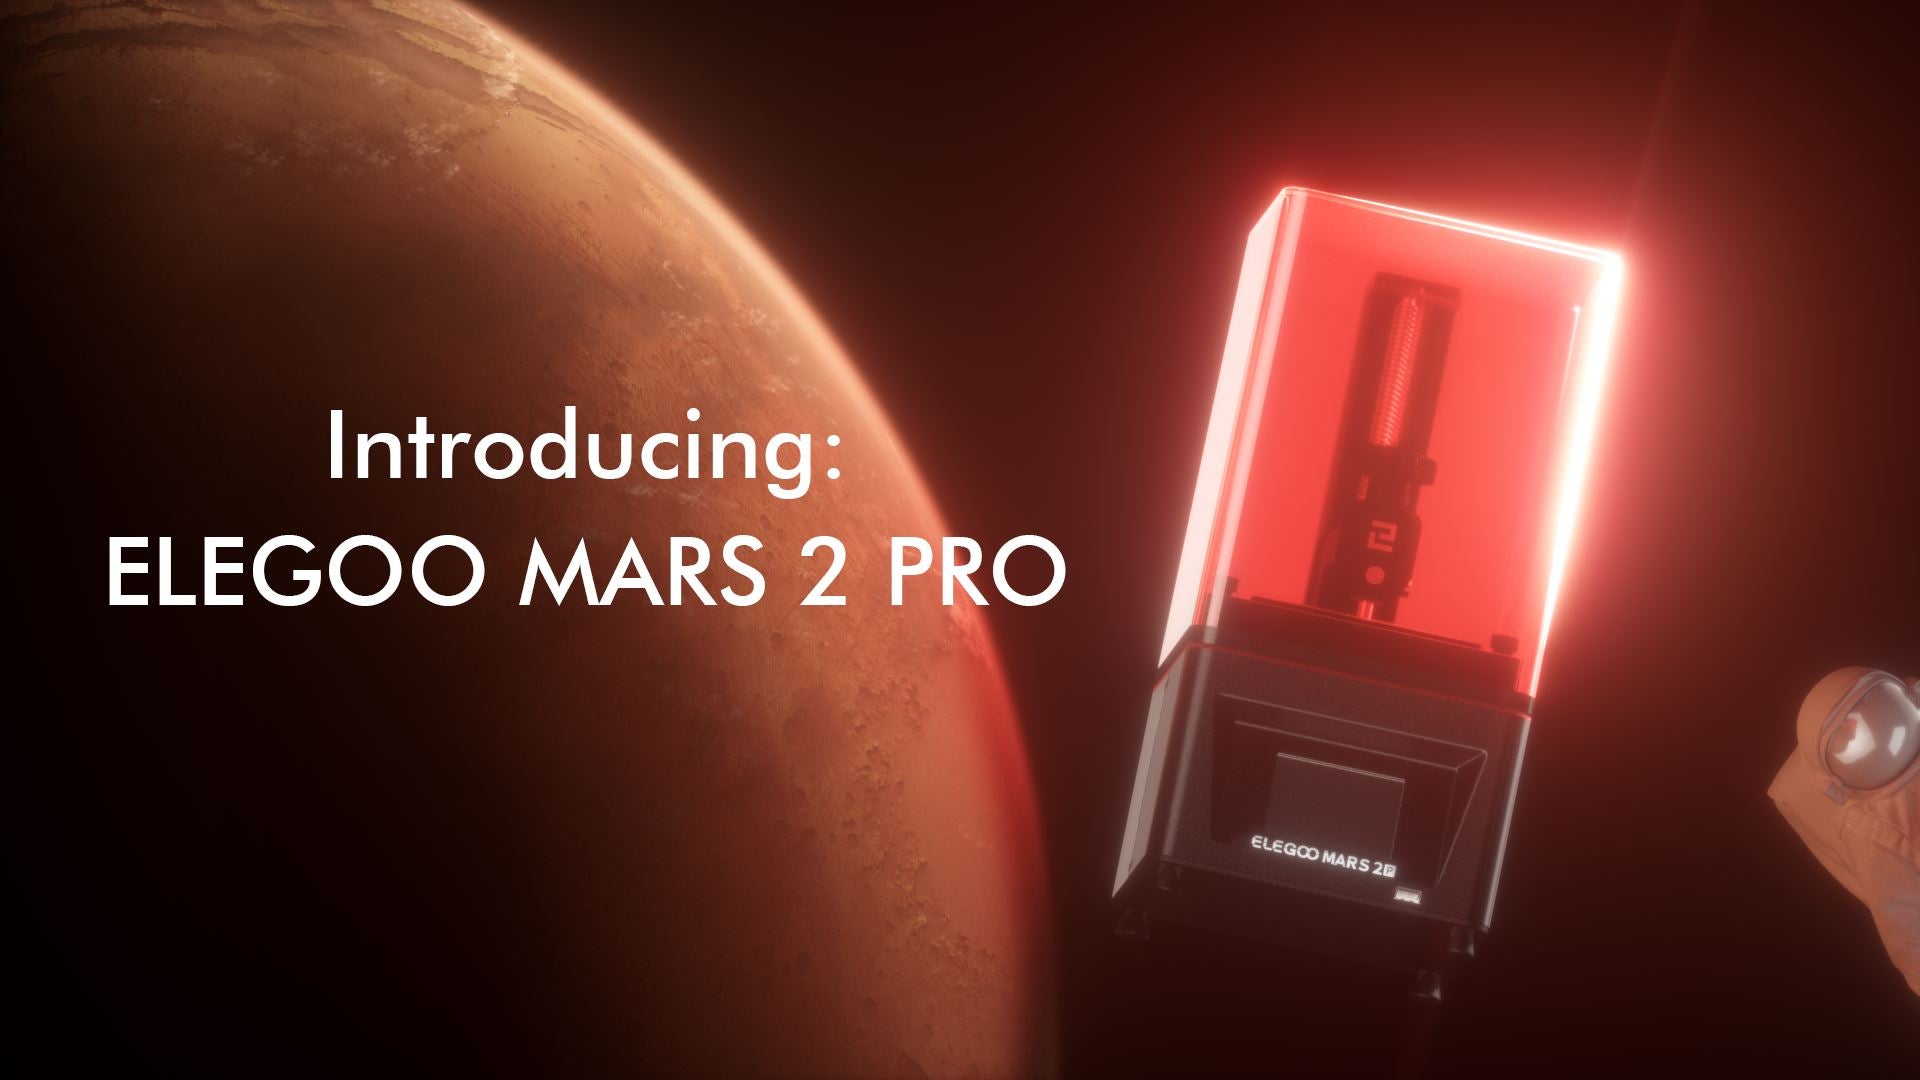 Enjoy your ride to ELEGOO Mars 2 Pro